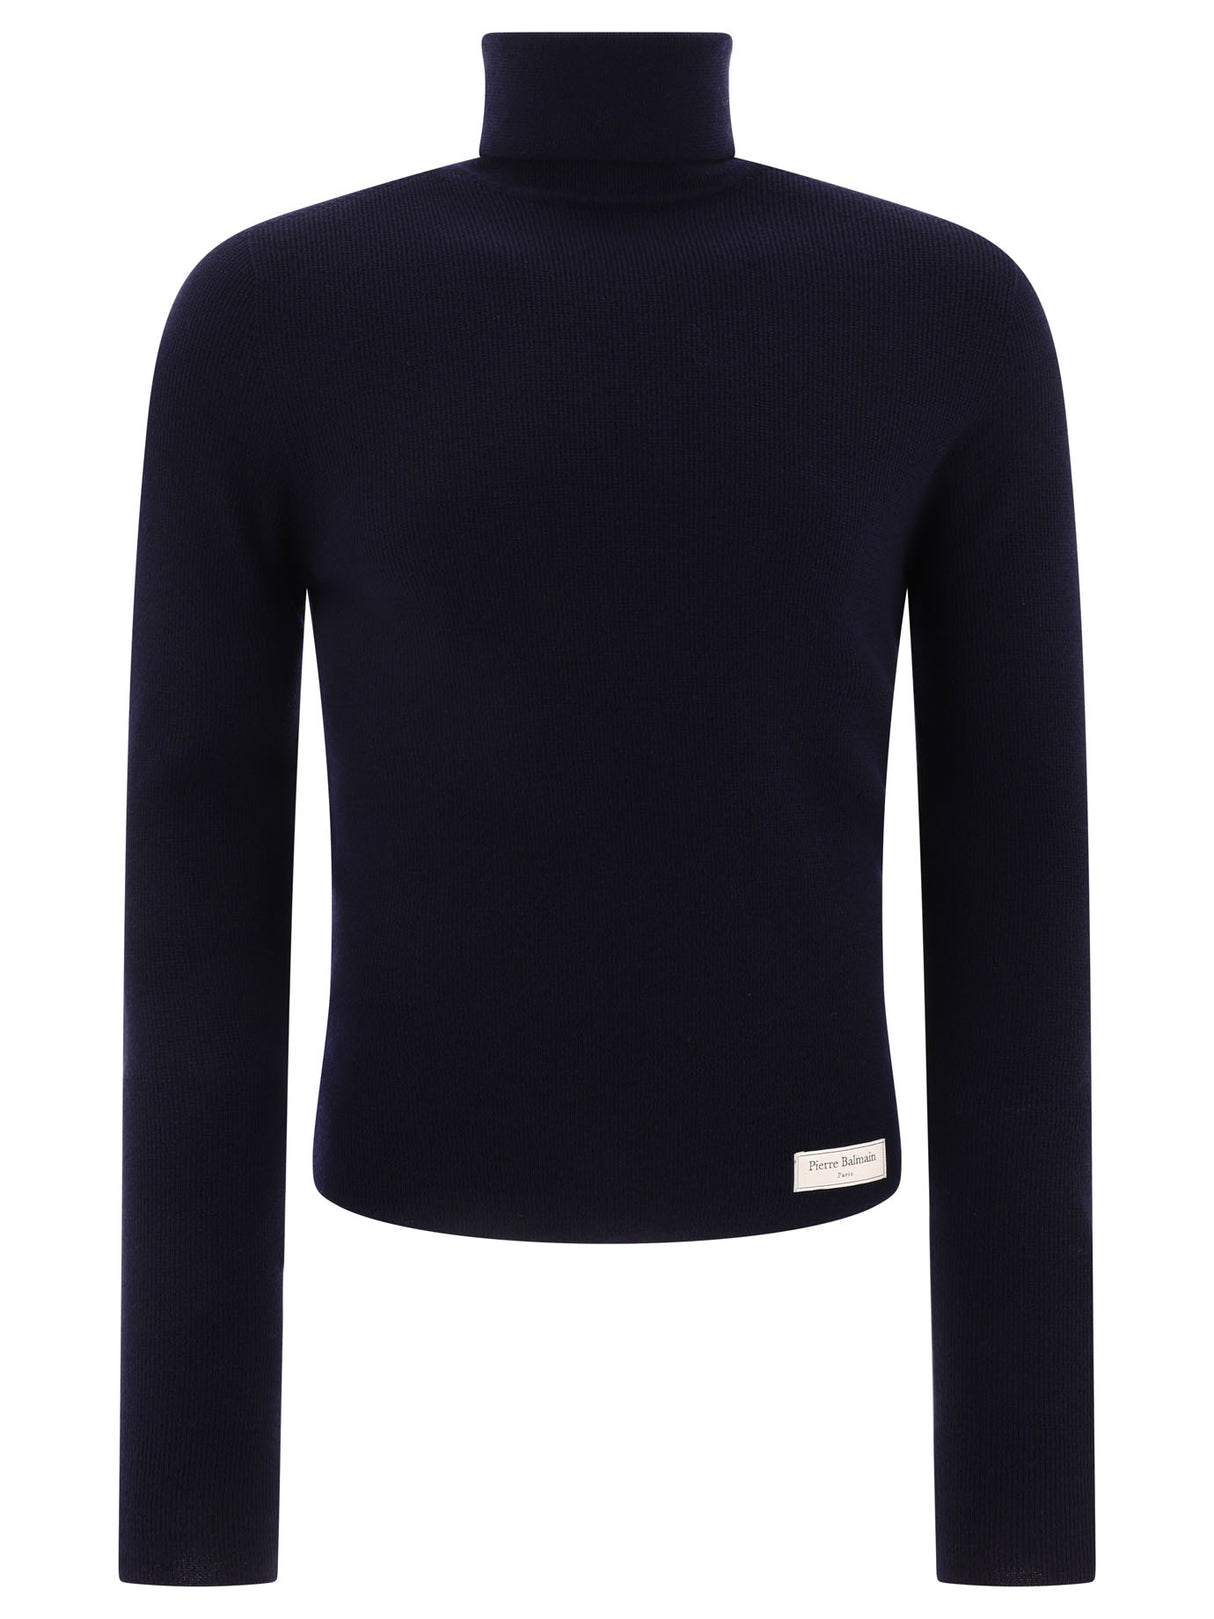 BALMAIN Luxurious Navy Sweater for Men - FW24 Collection